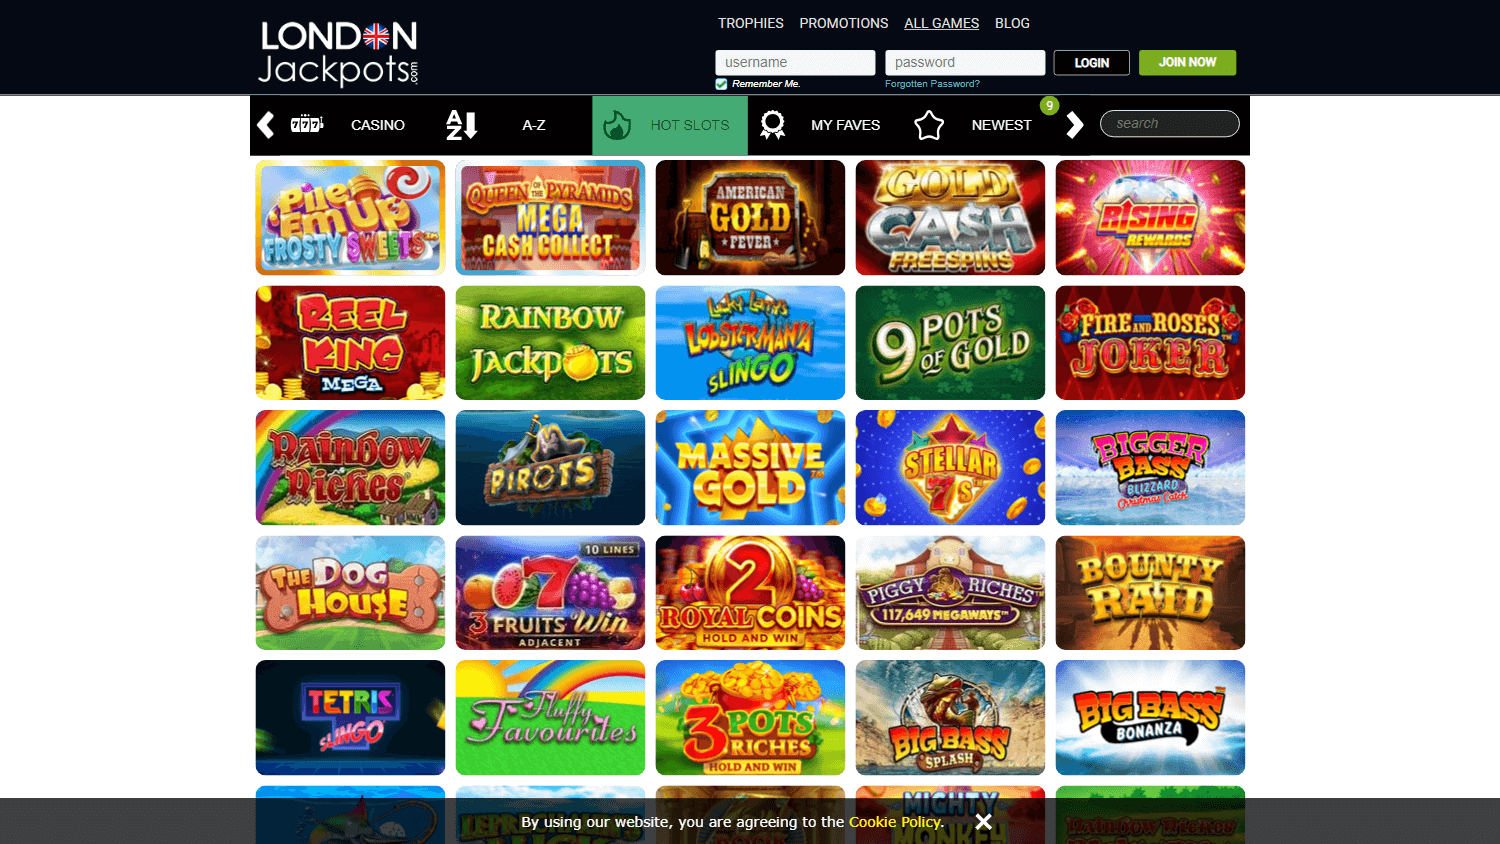 london_jackpots_casino_game_gallery_desktop